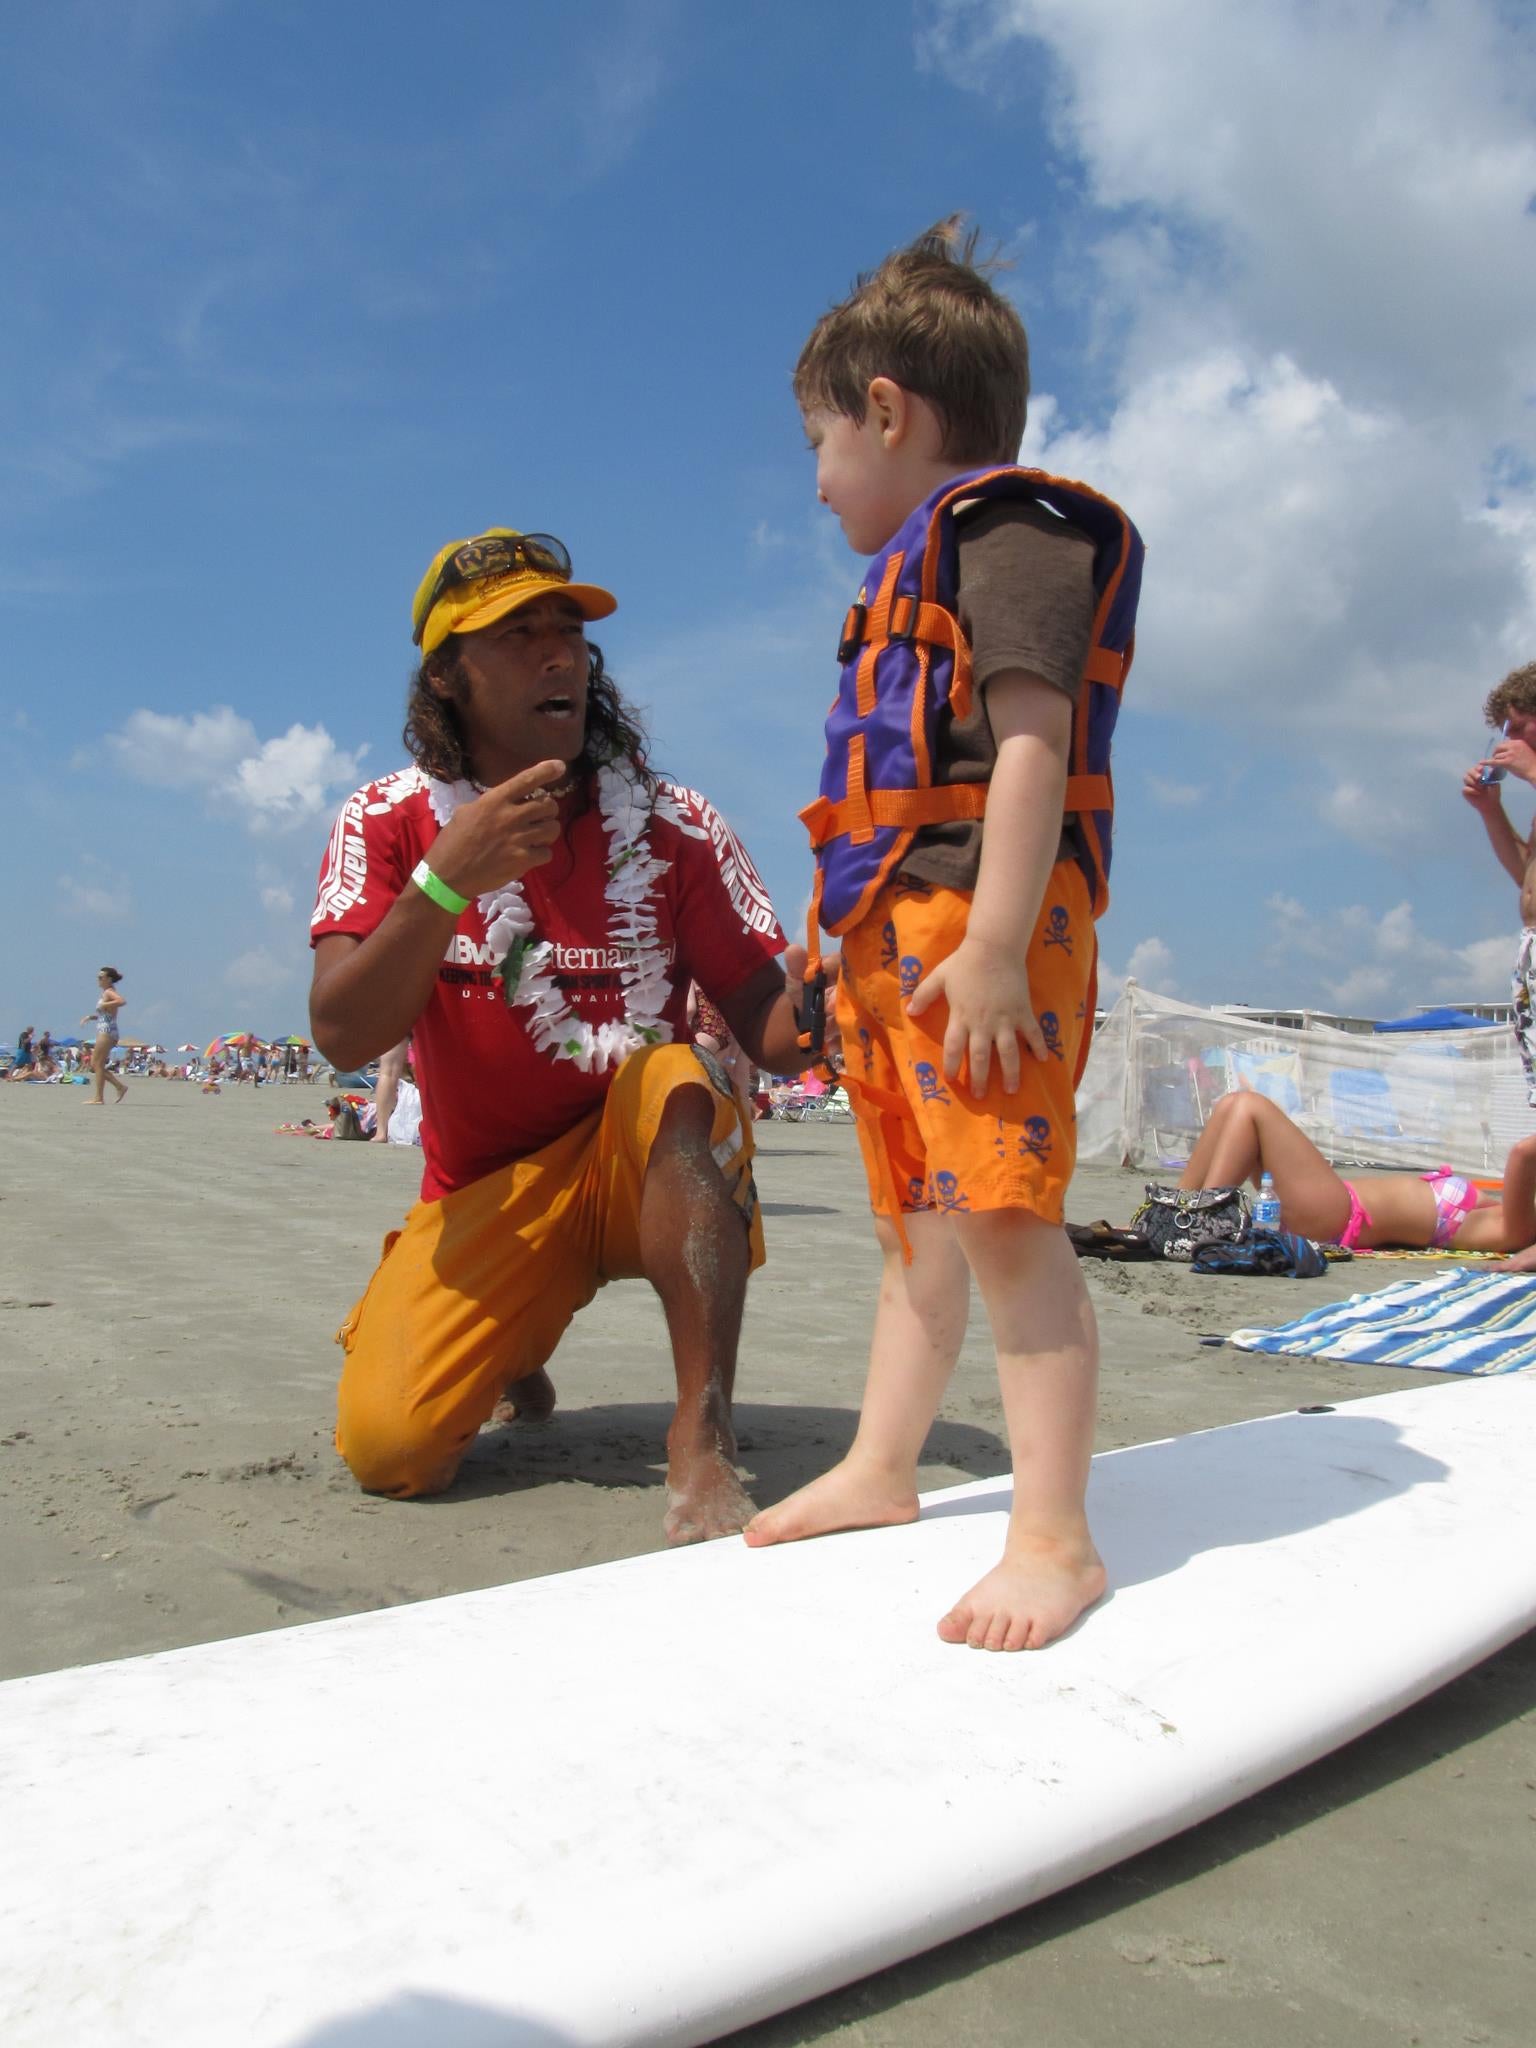 Hot Sushi's Happy Surf Camp Aloha, Official Georgia Tourism & Travel  Website